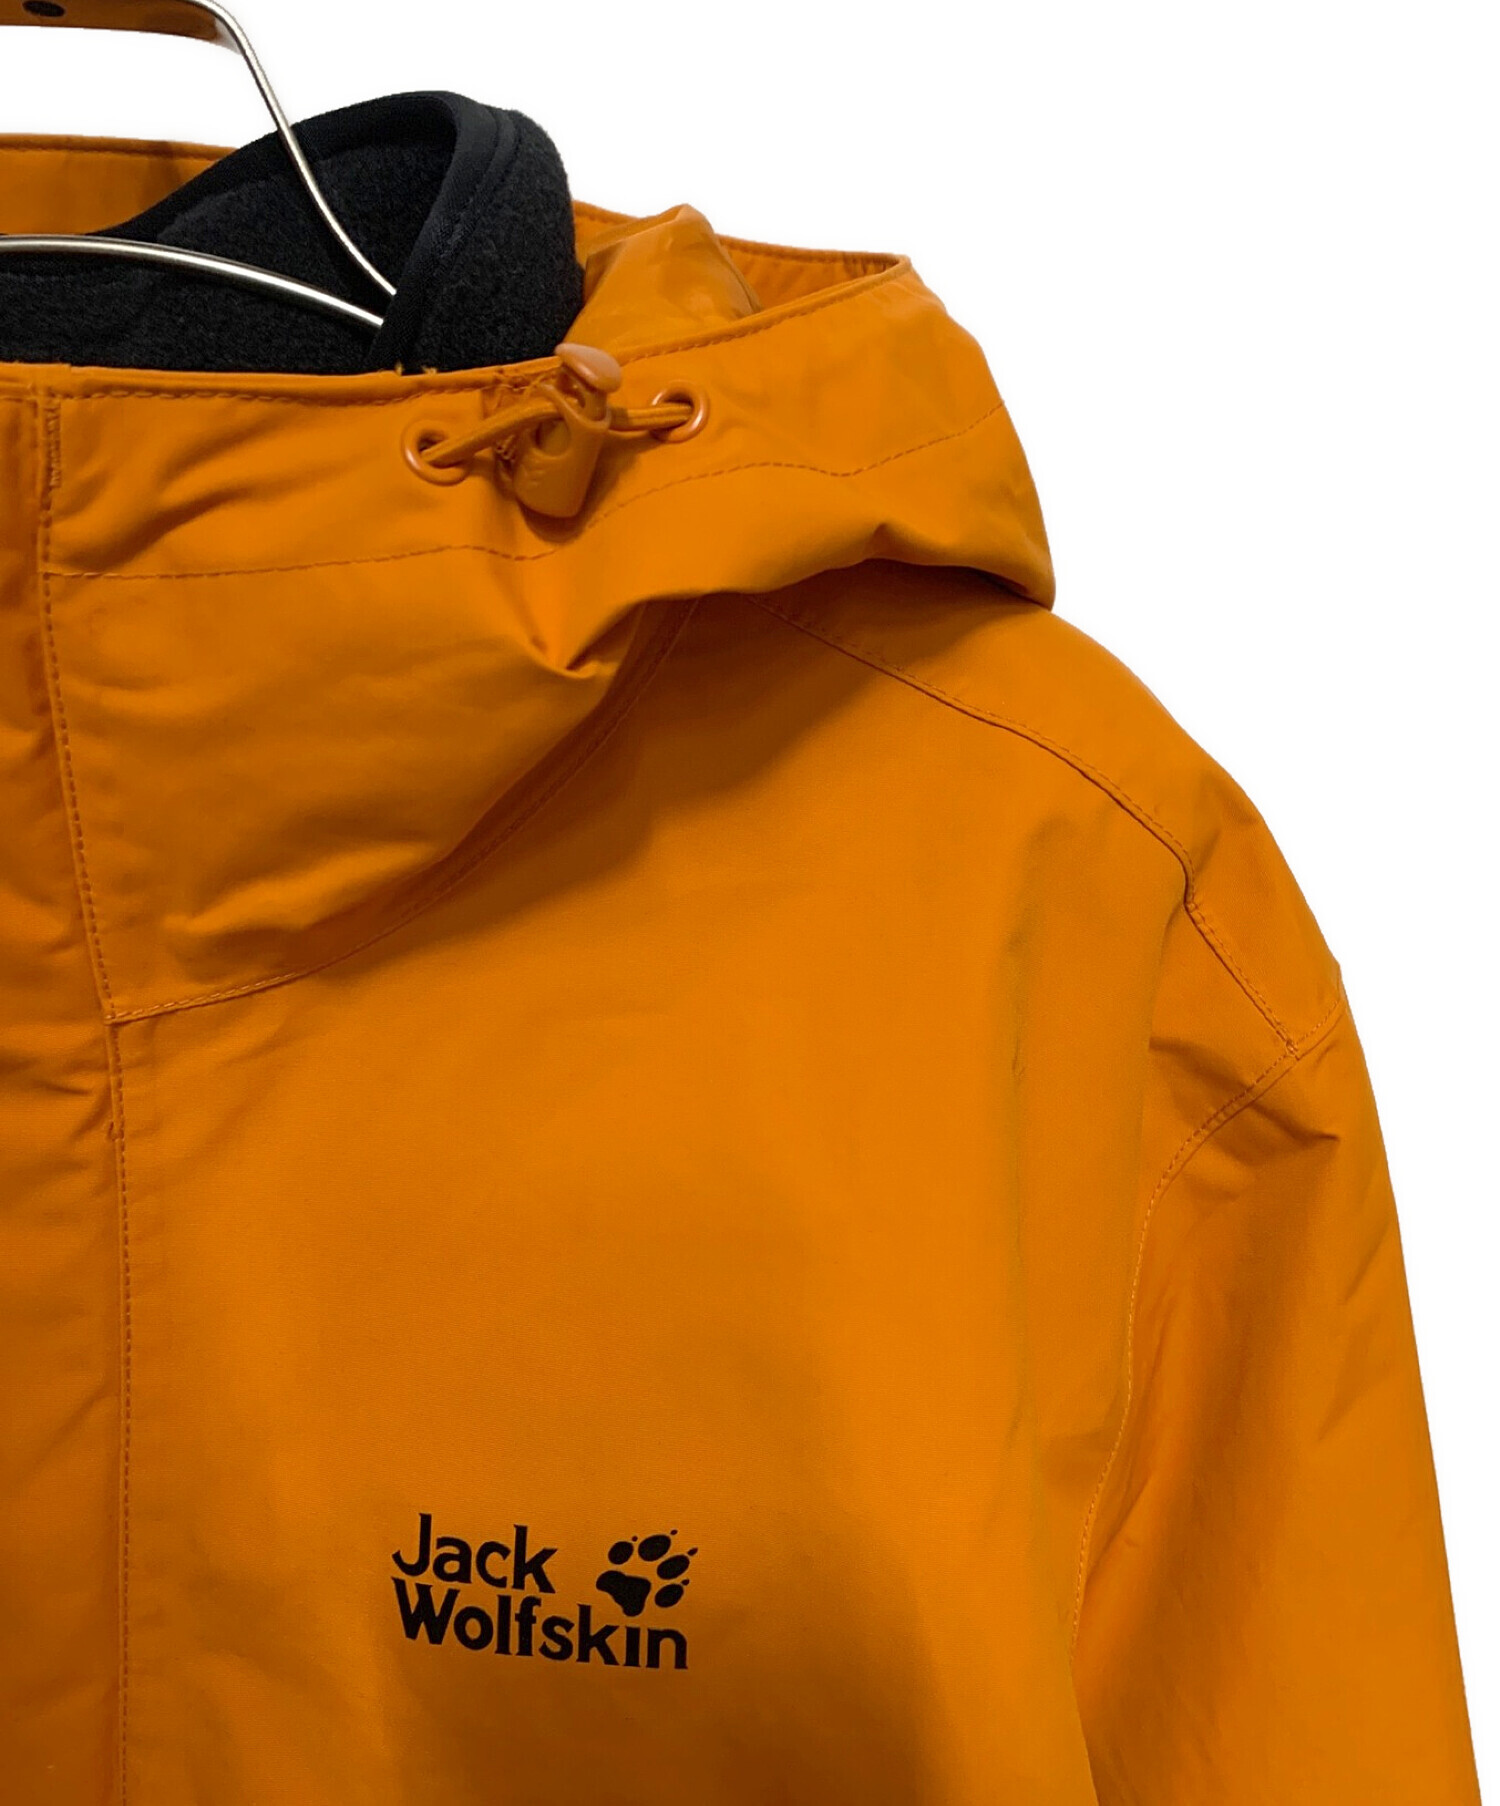 Jack Wolfskin (ジャック ウルフスキン) MFO CRUSH'IN ICE 3IN1 JKT オレンジ サイズ:XL